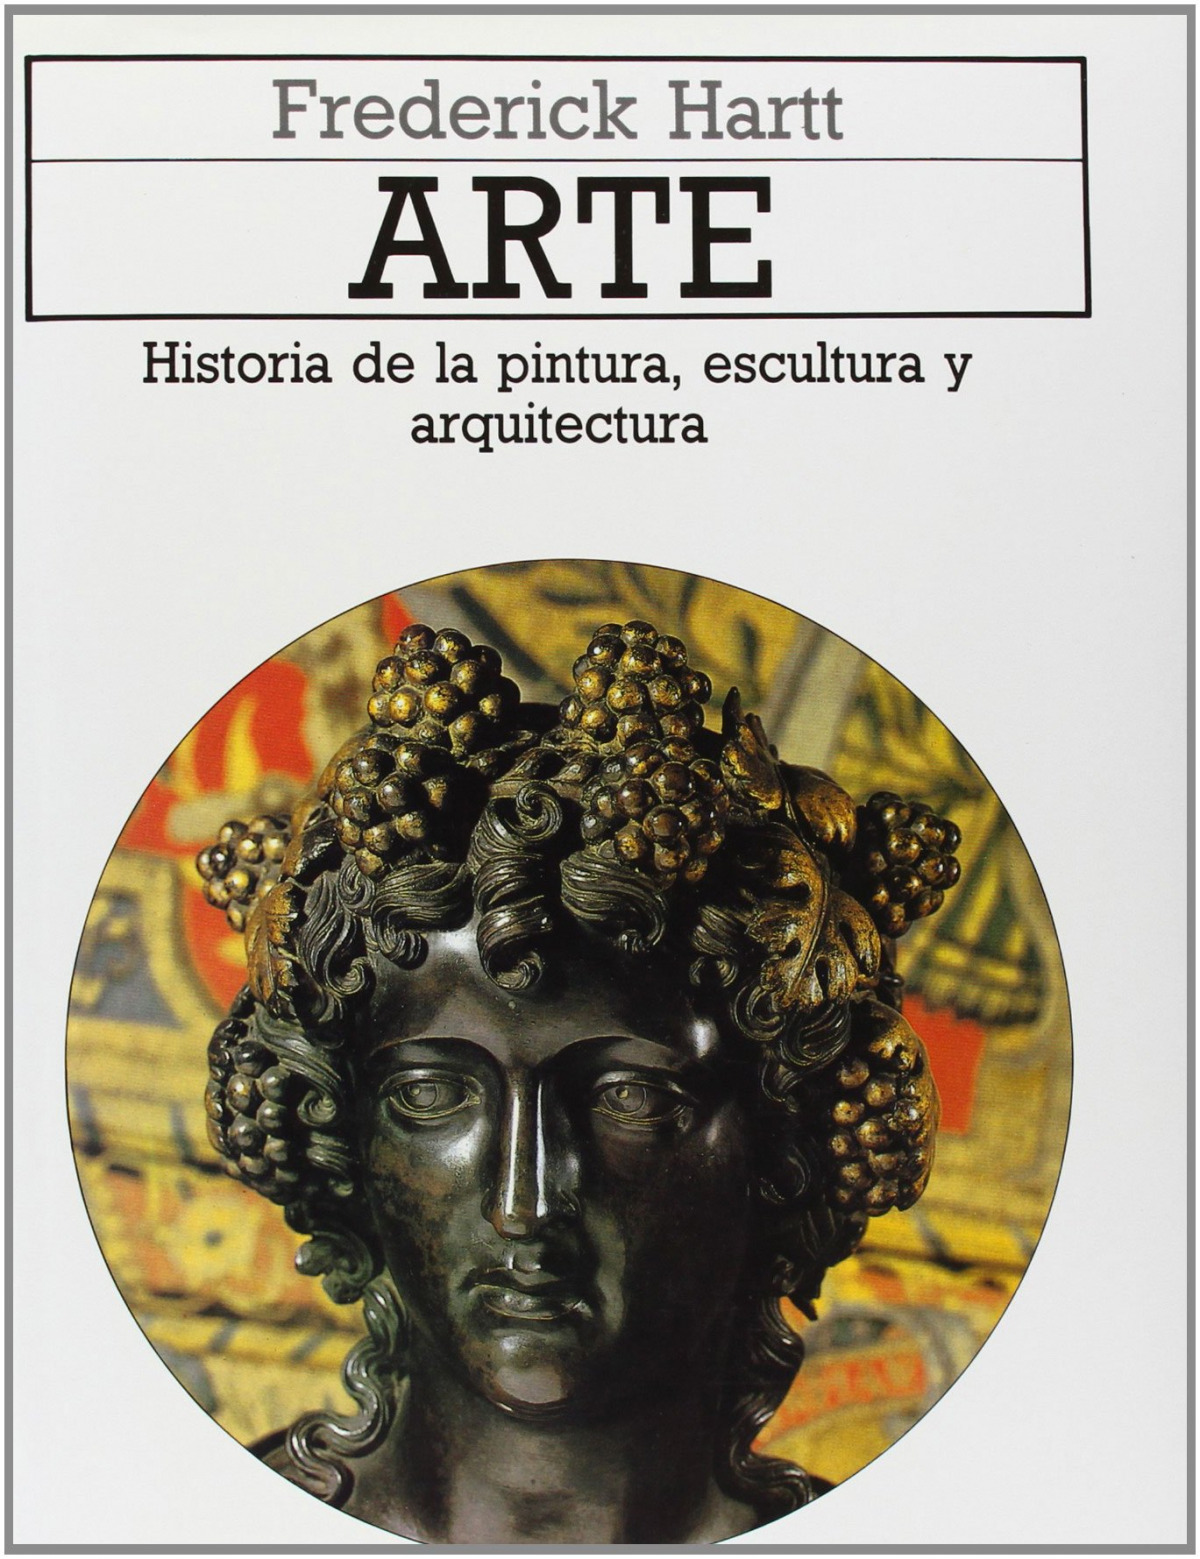 Arte: Historia de la pintura, escultura y arquitectura - Hartt, Frederick